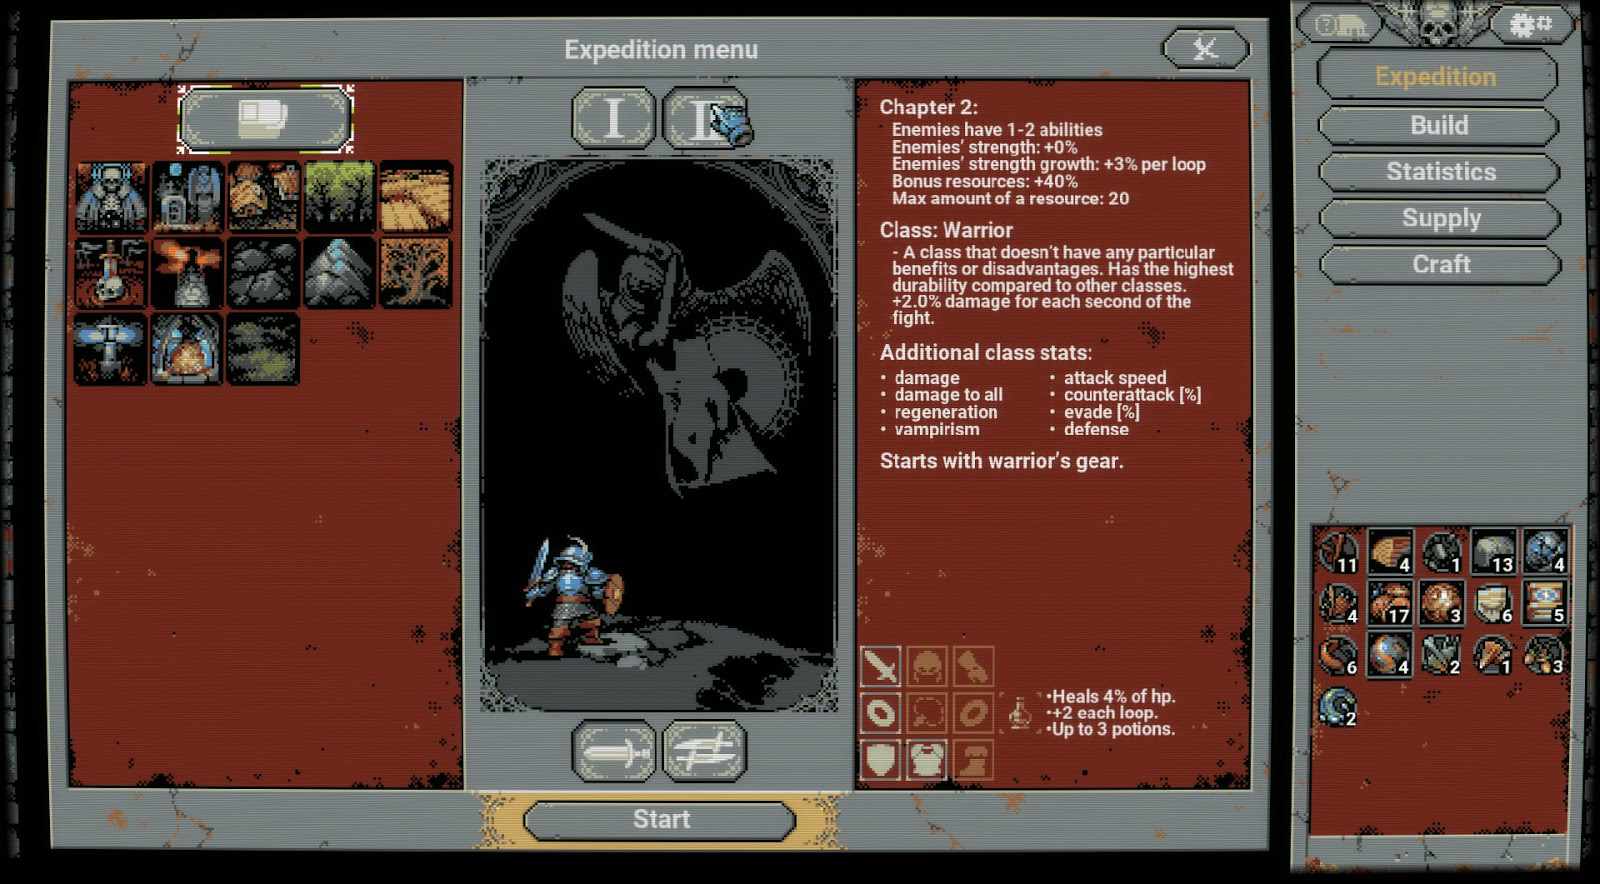 Screenshot z nabídky Expedice v „Loop Hero“.